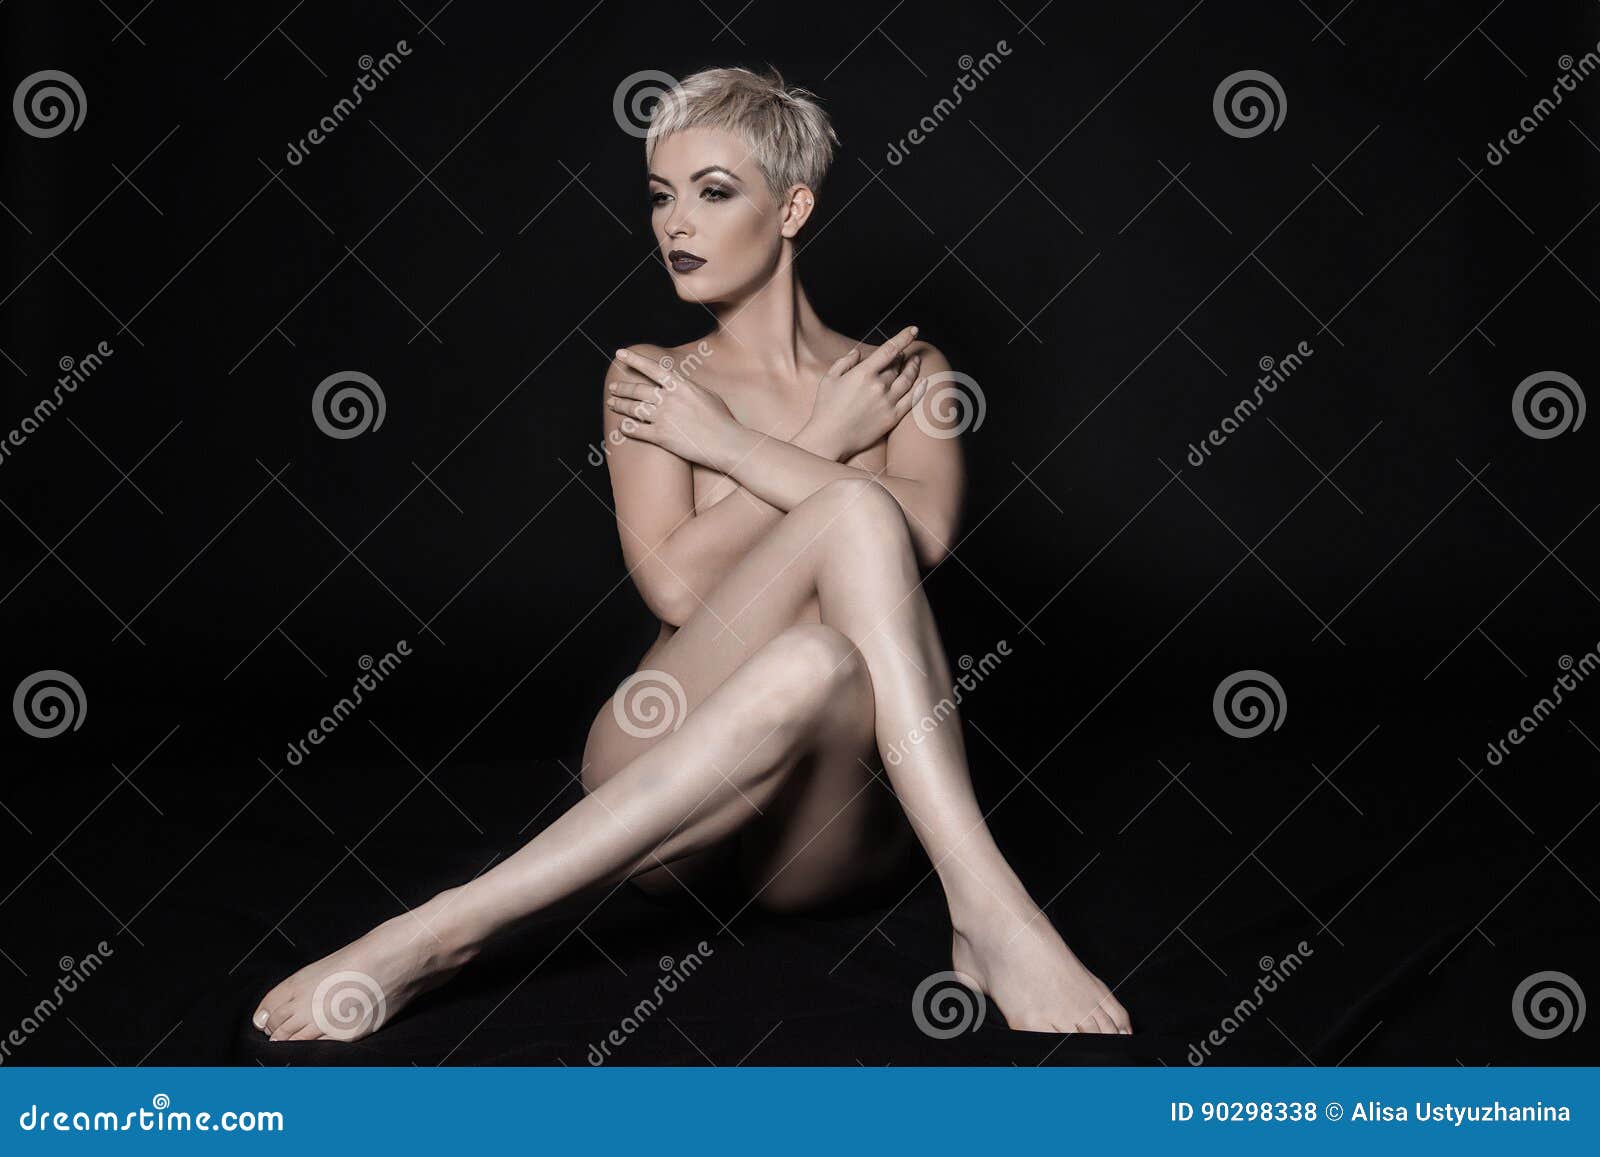 bernardina whited recommends Nude Women With Beautiful Legs